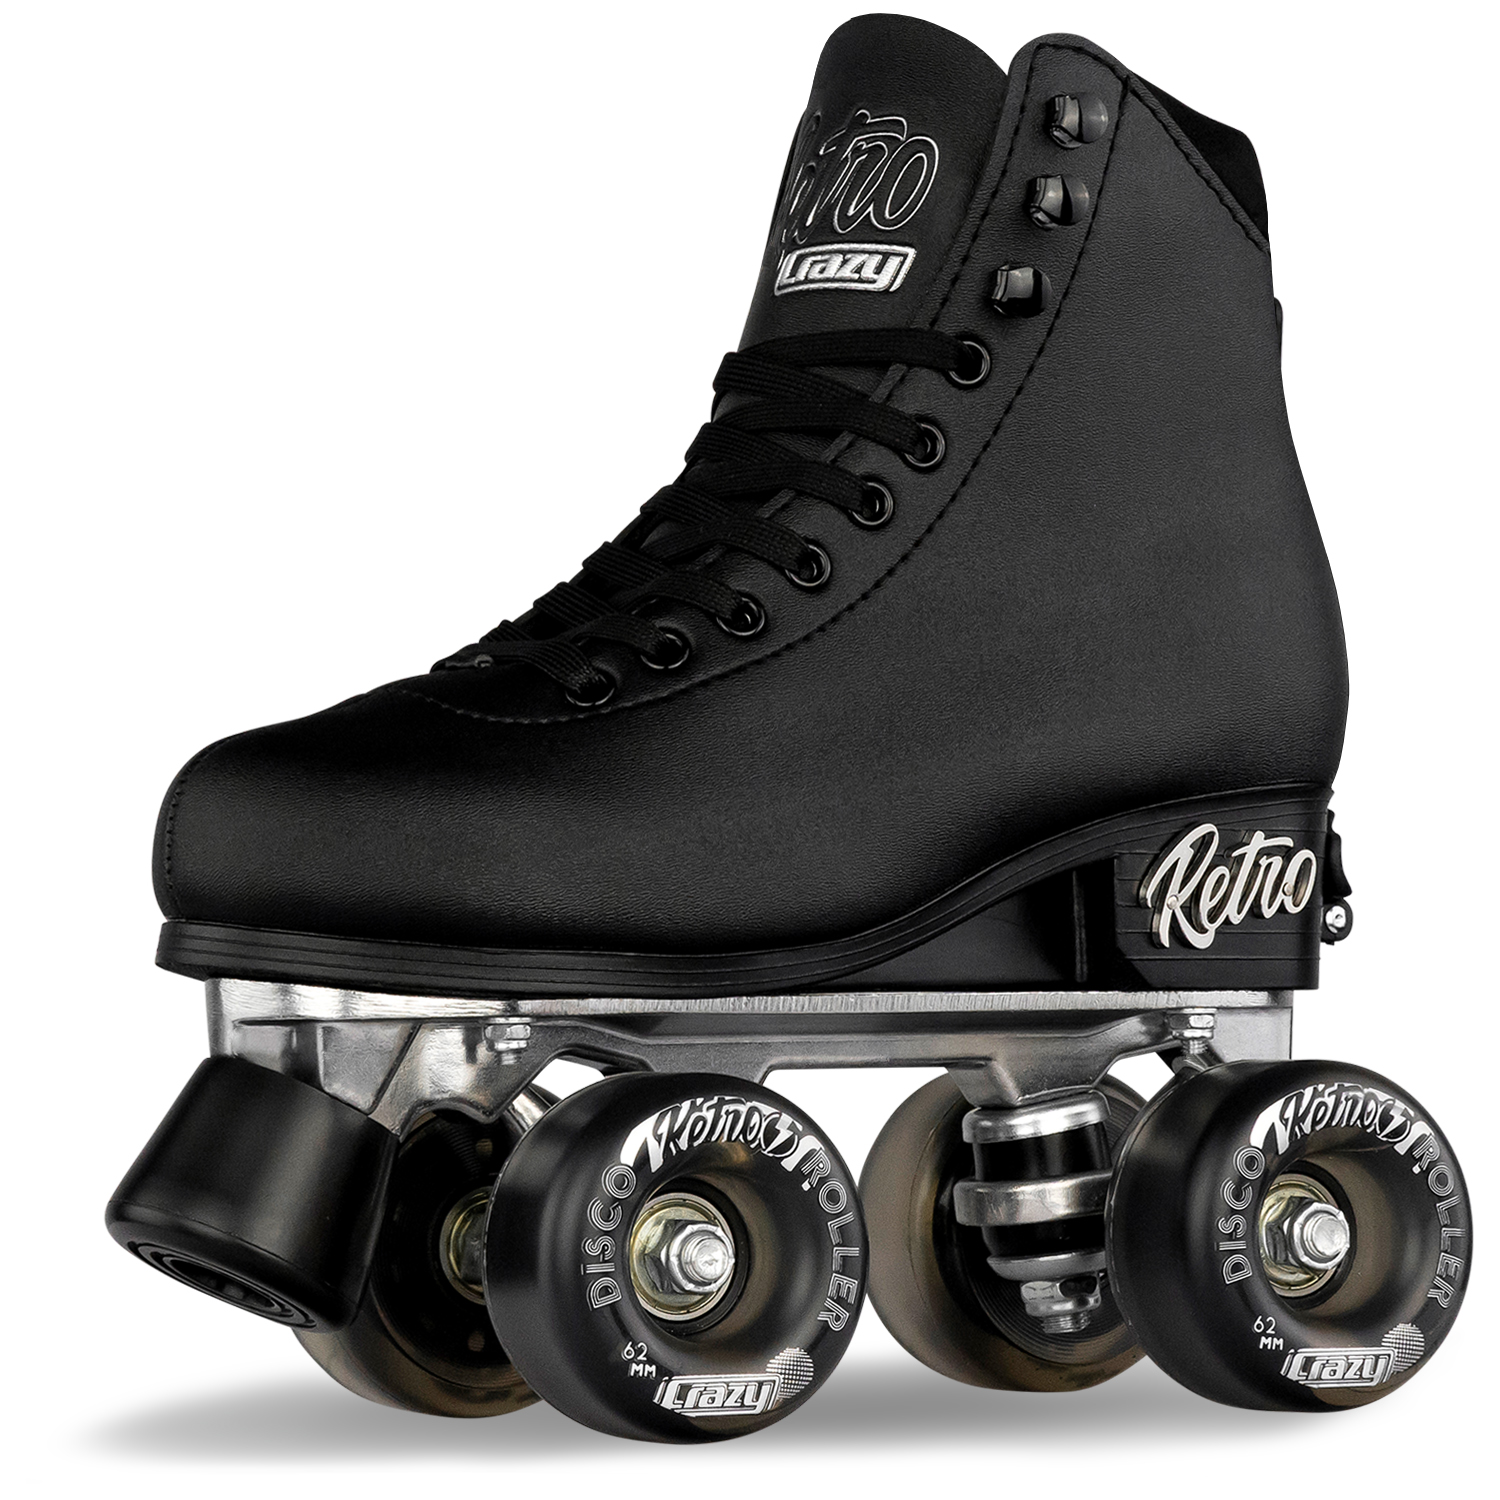 Crazy Skates Retro Roller Skates | Size Adjustable Classic Quad Skates